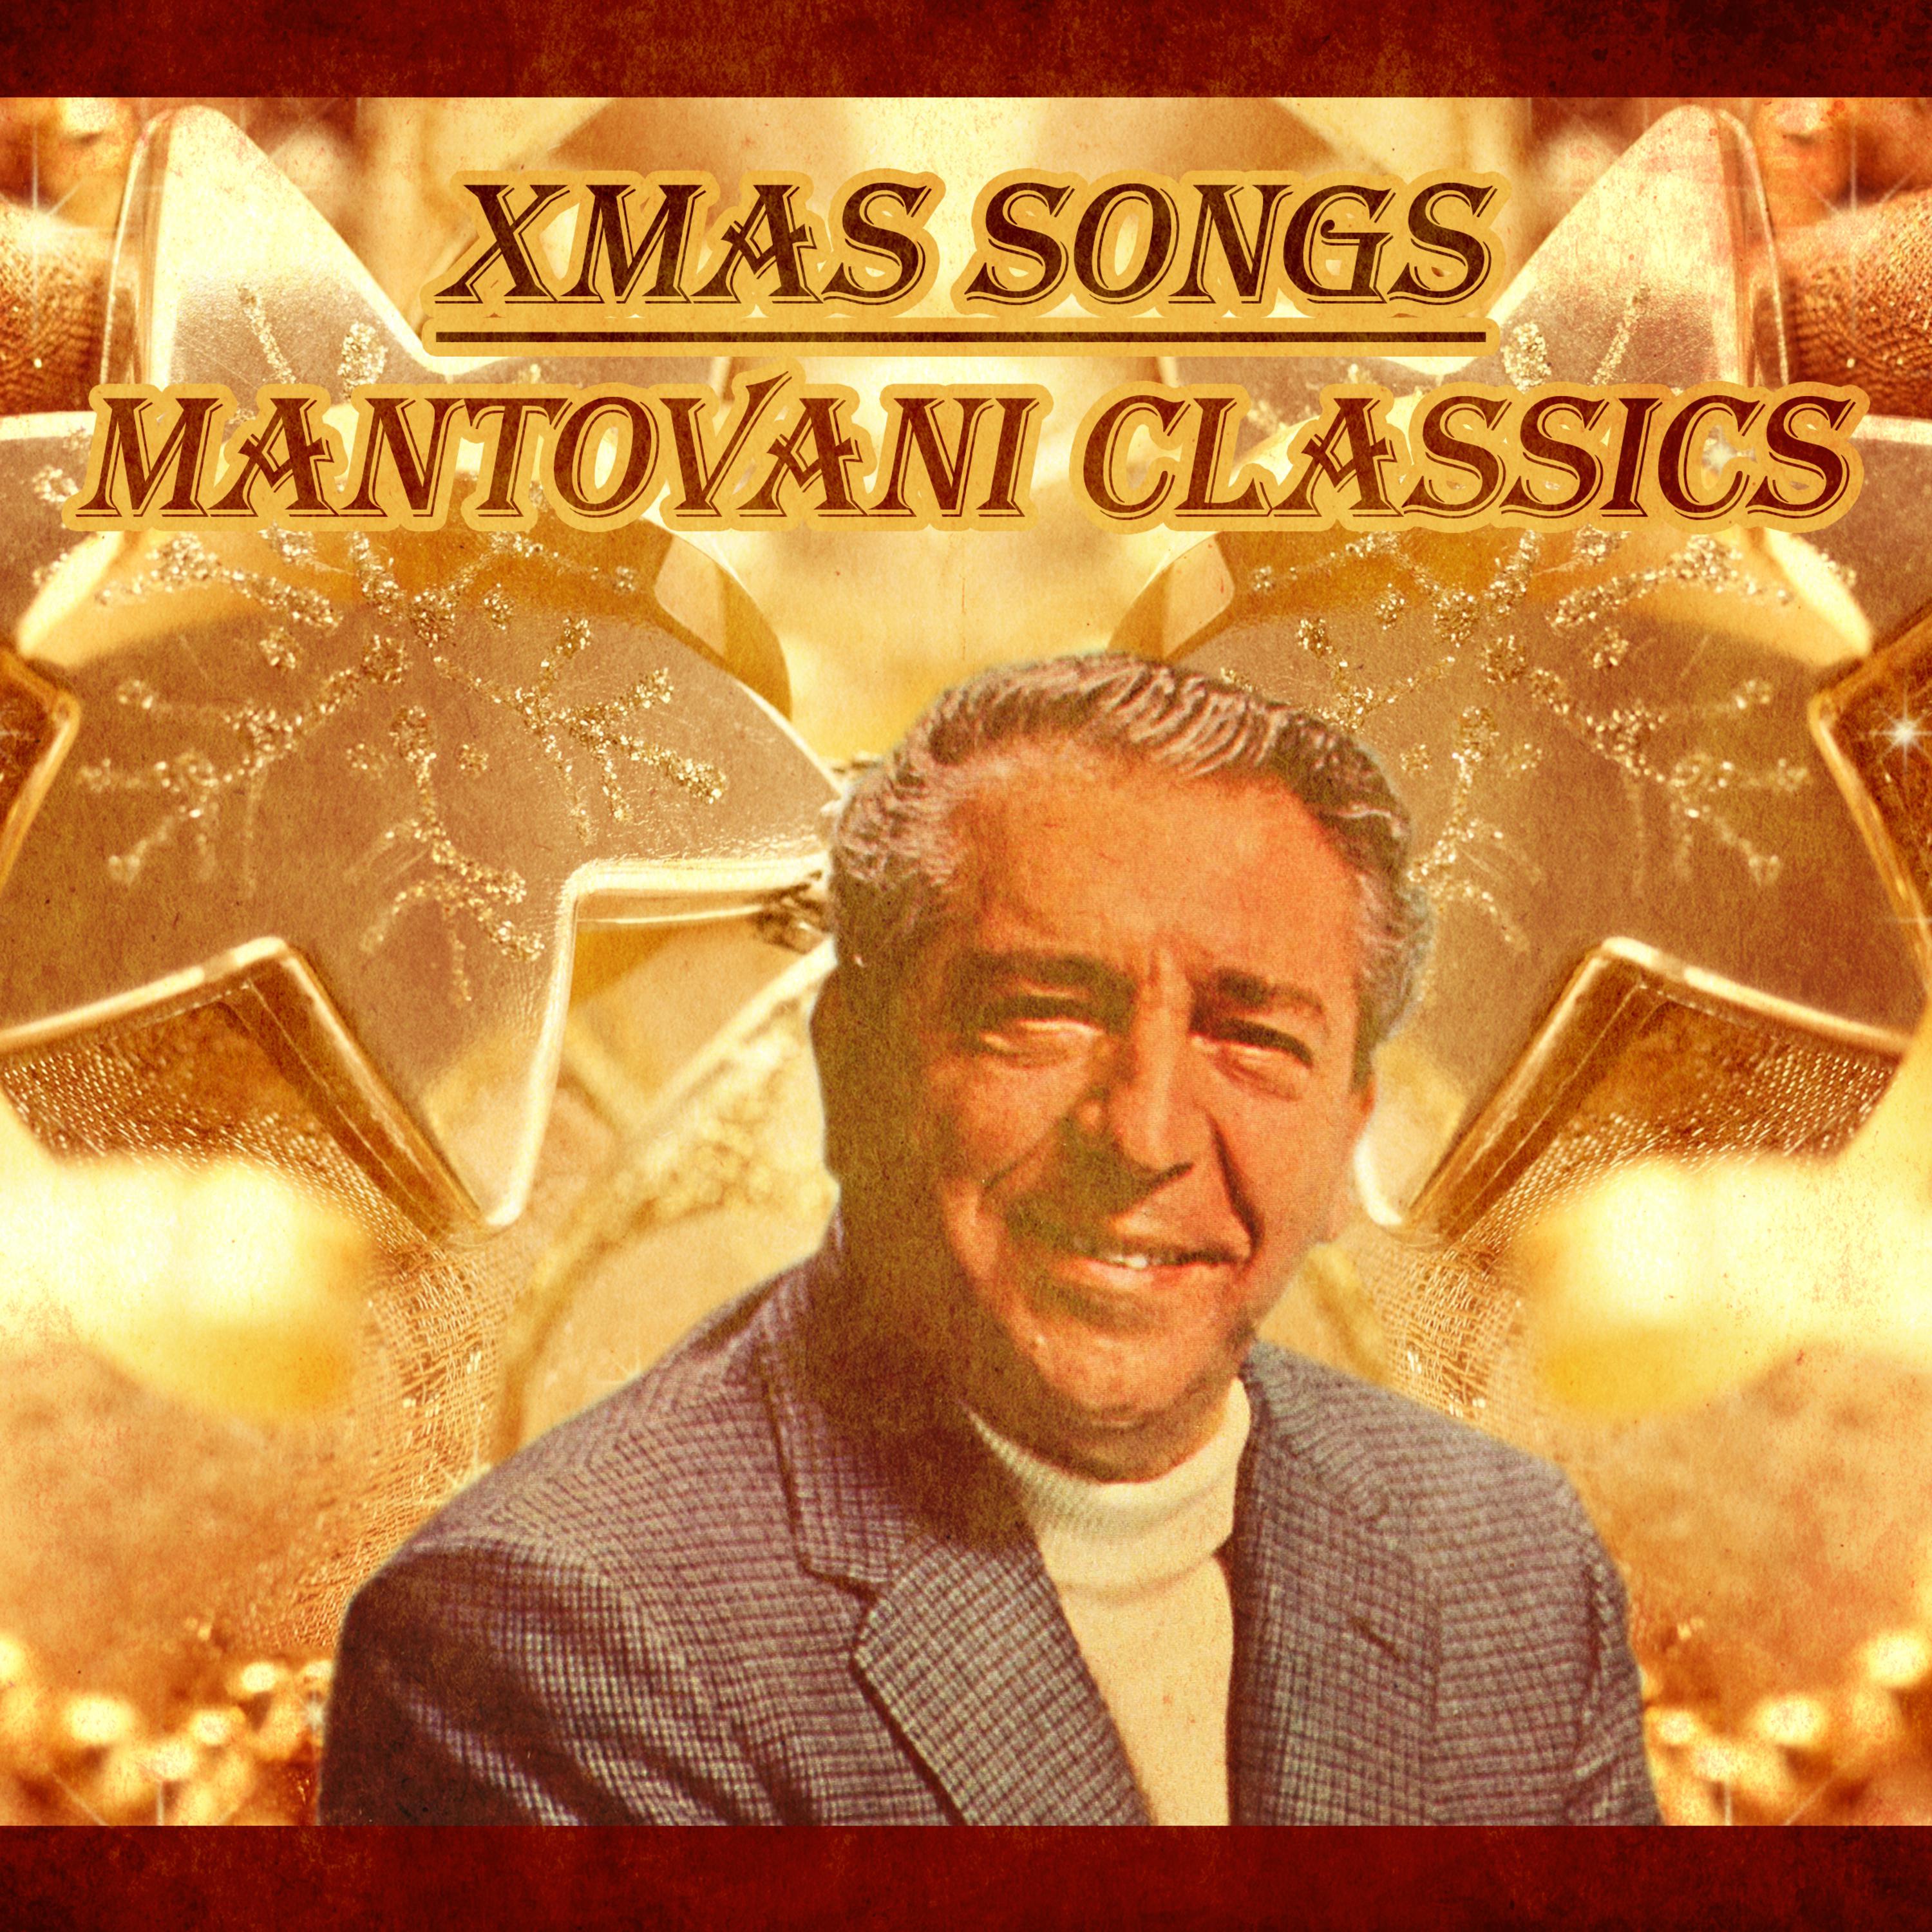 XMAS Songs: Mantovani Classics